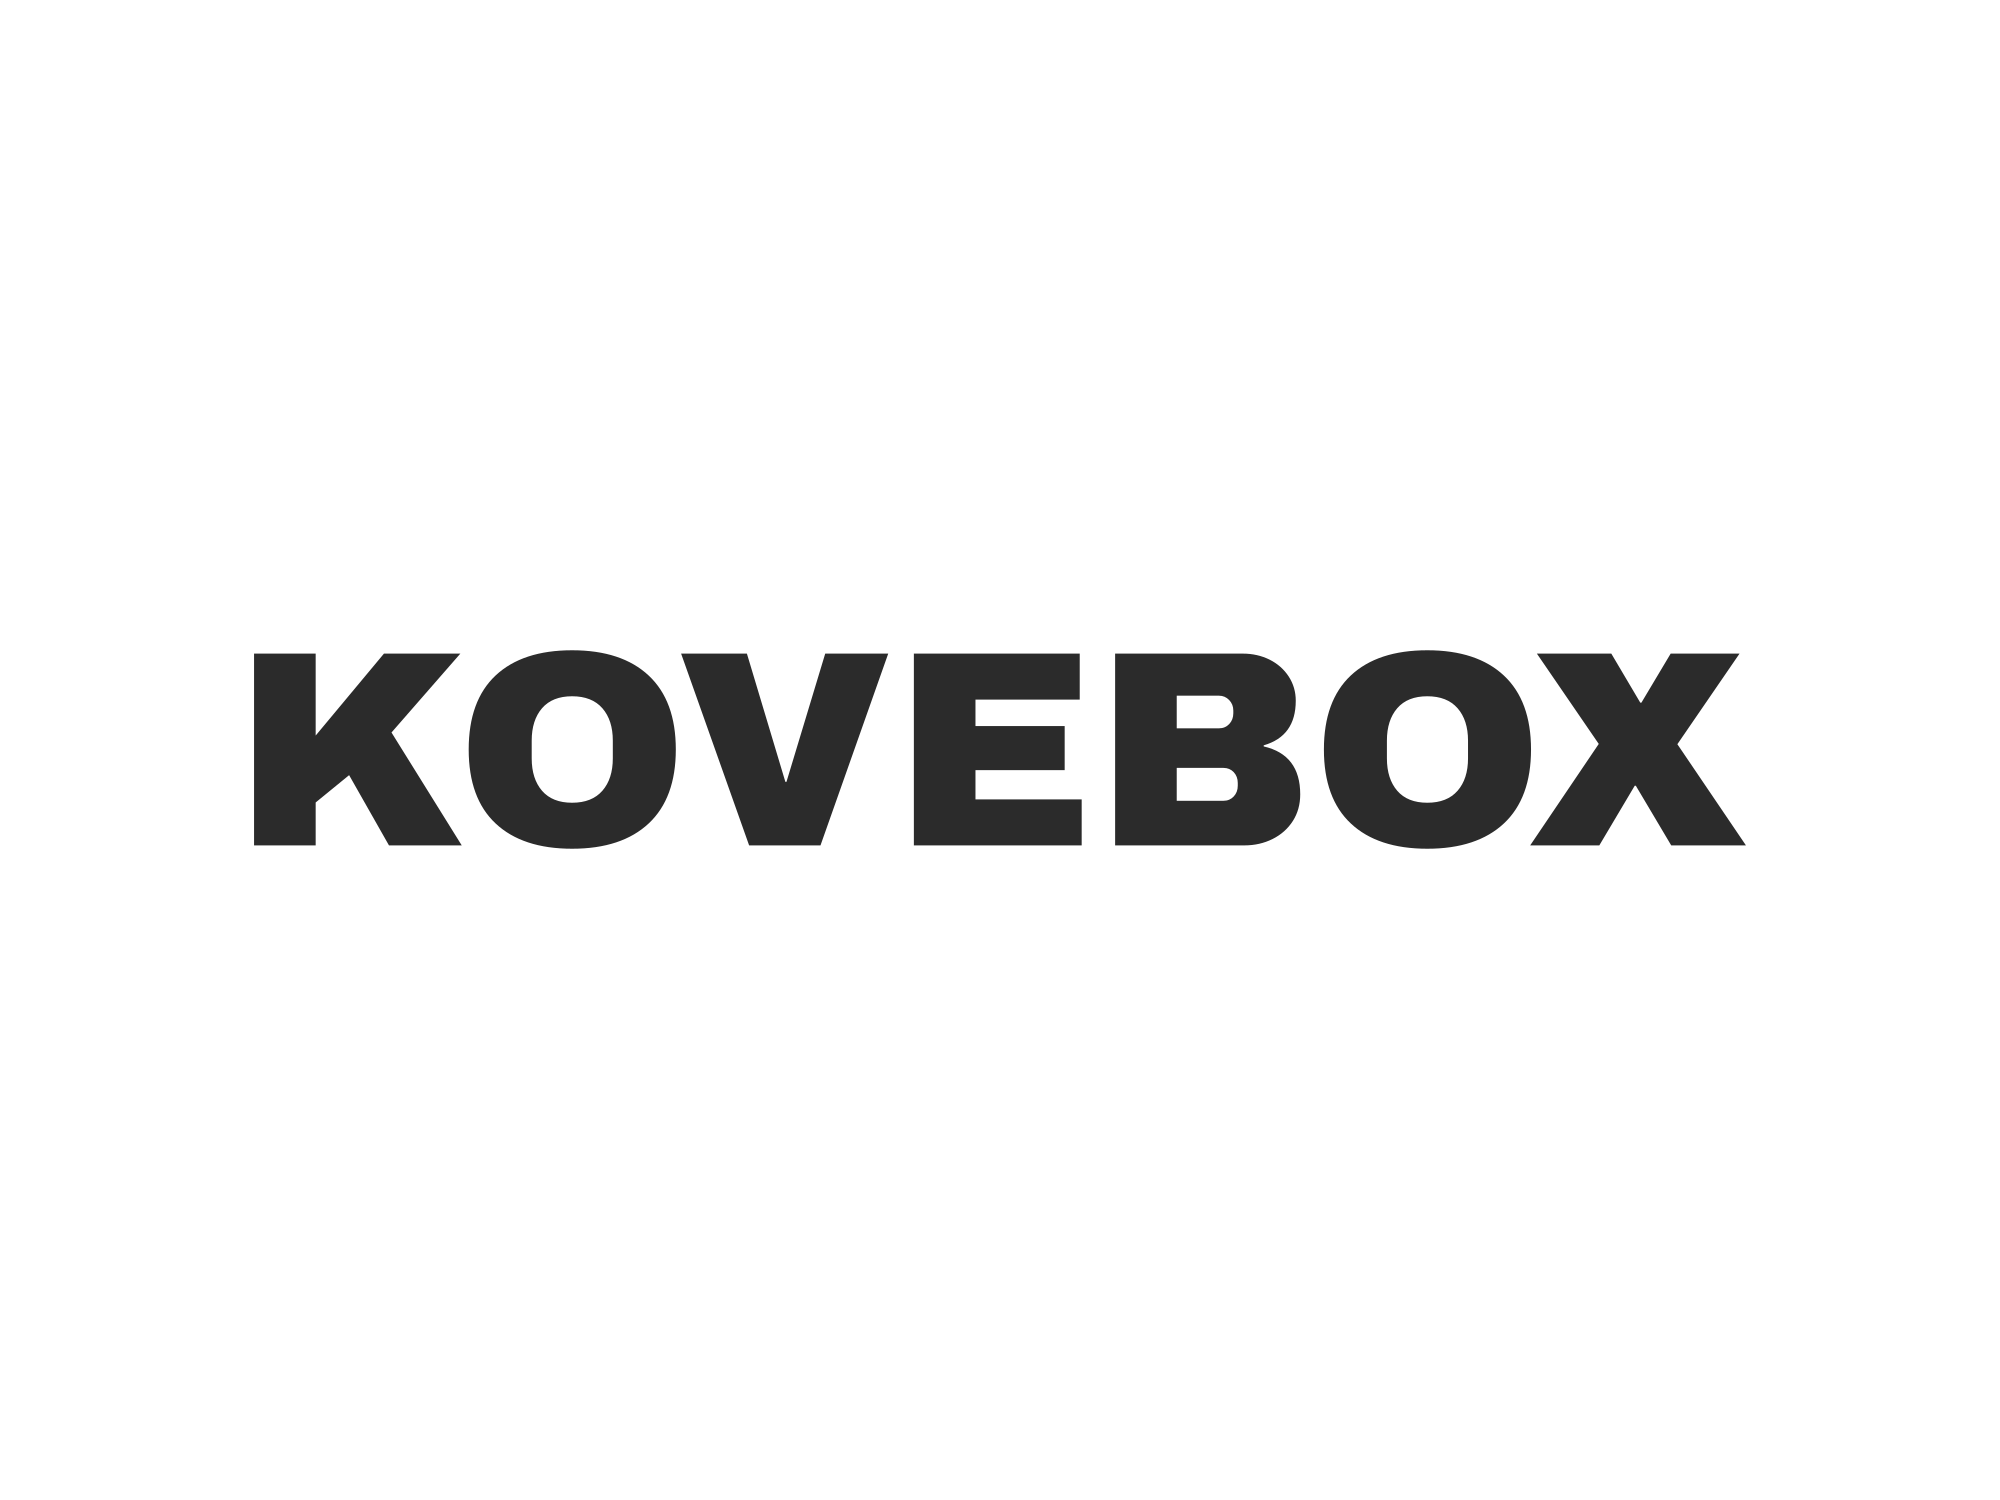 Kovebox